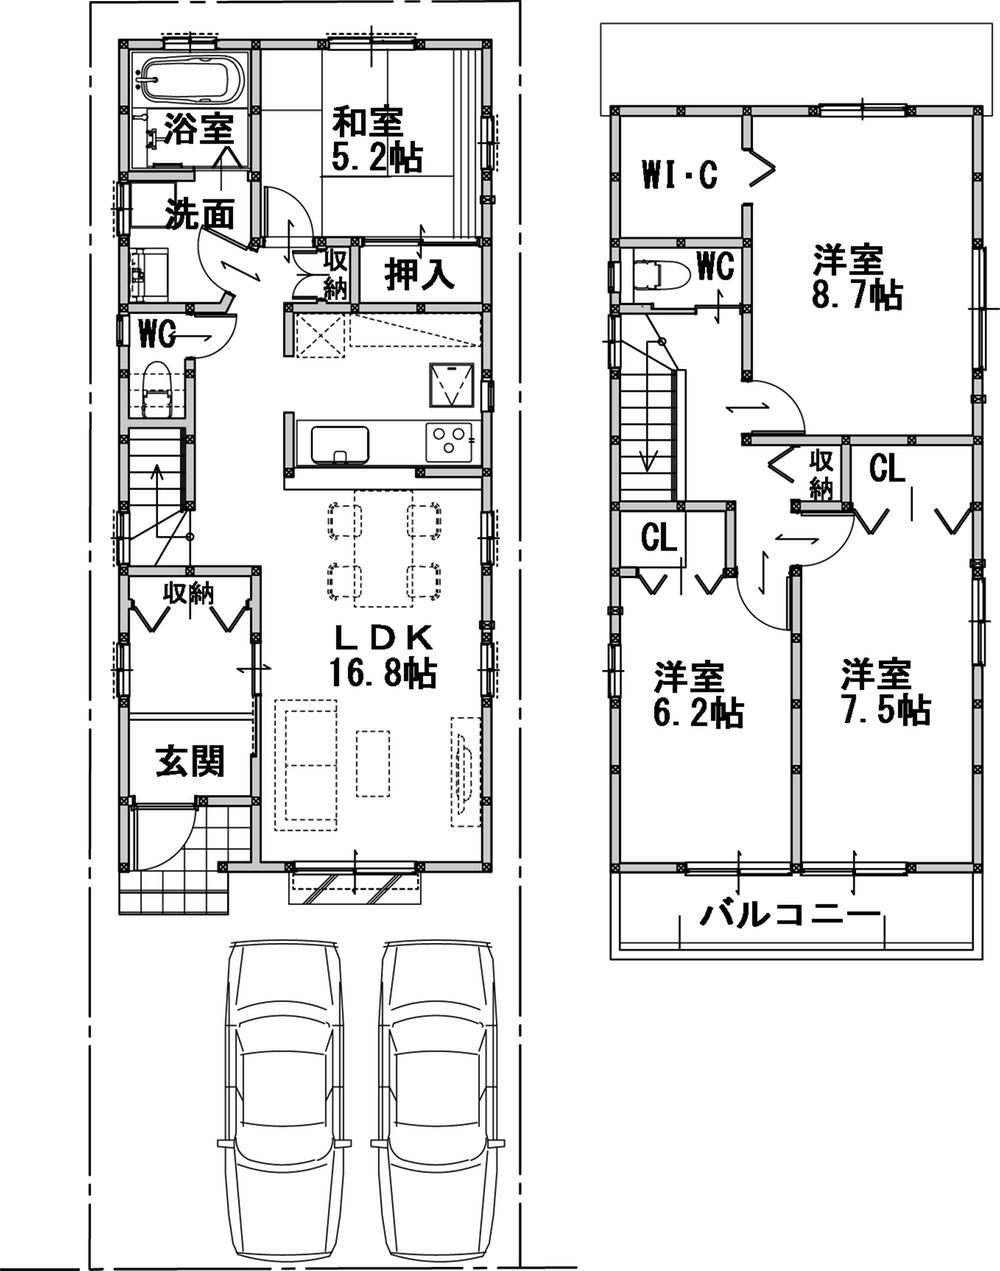 Floor plan. South Tower Floor